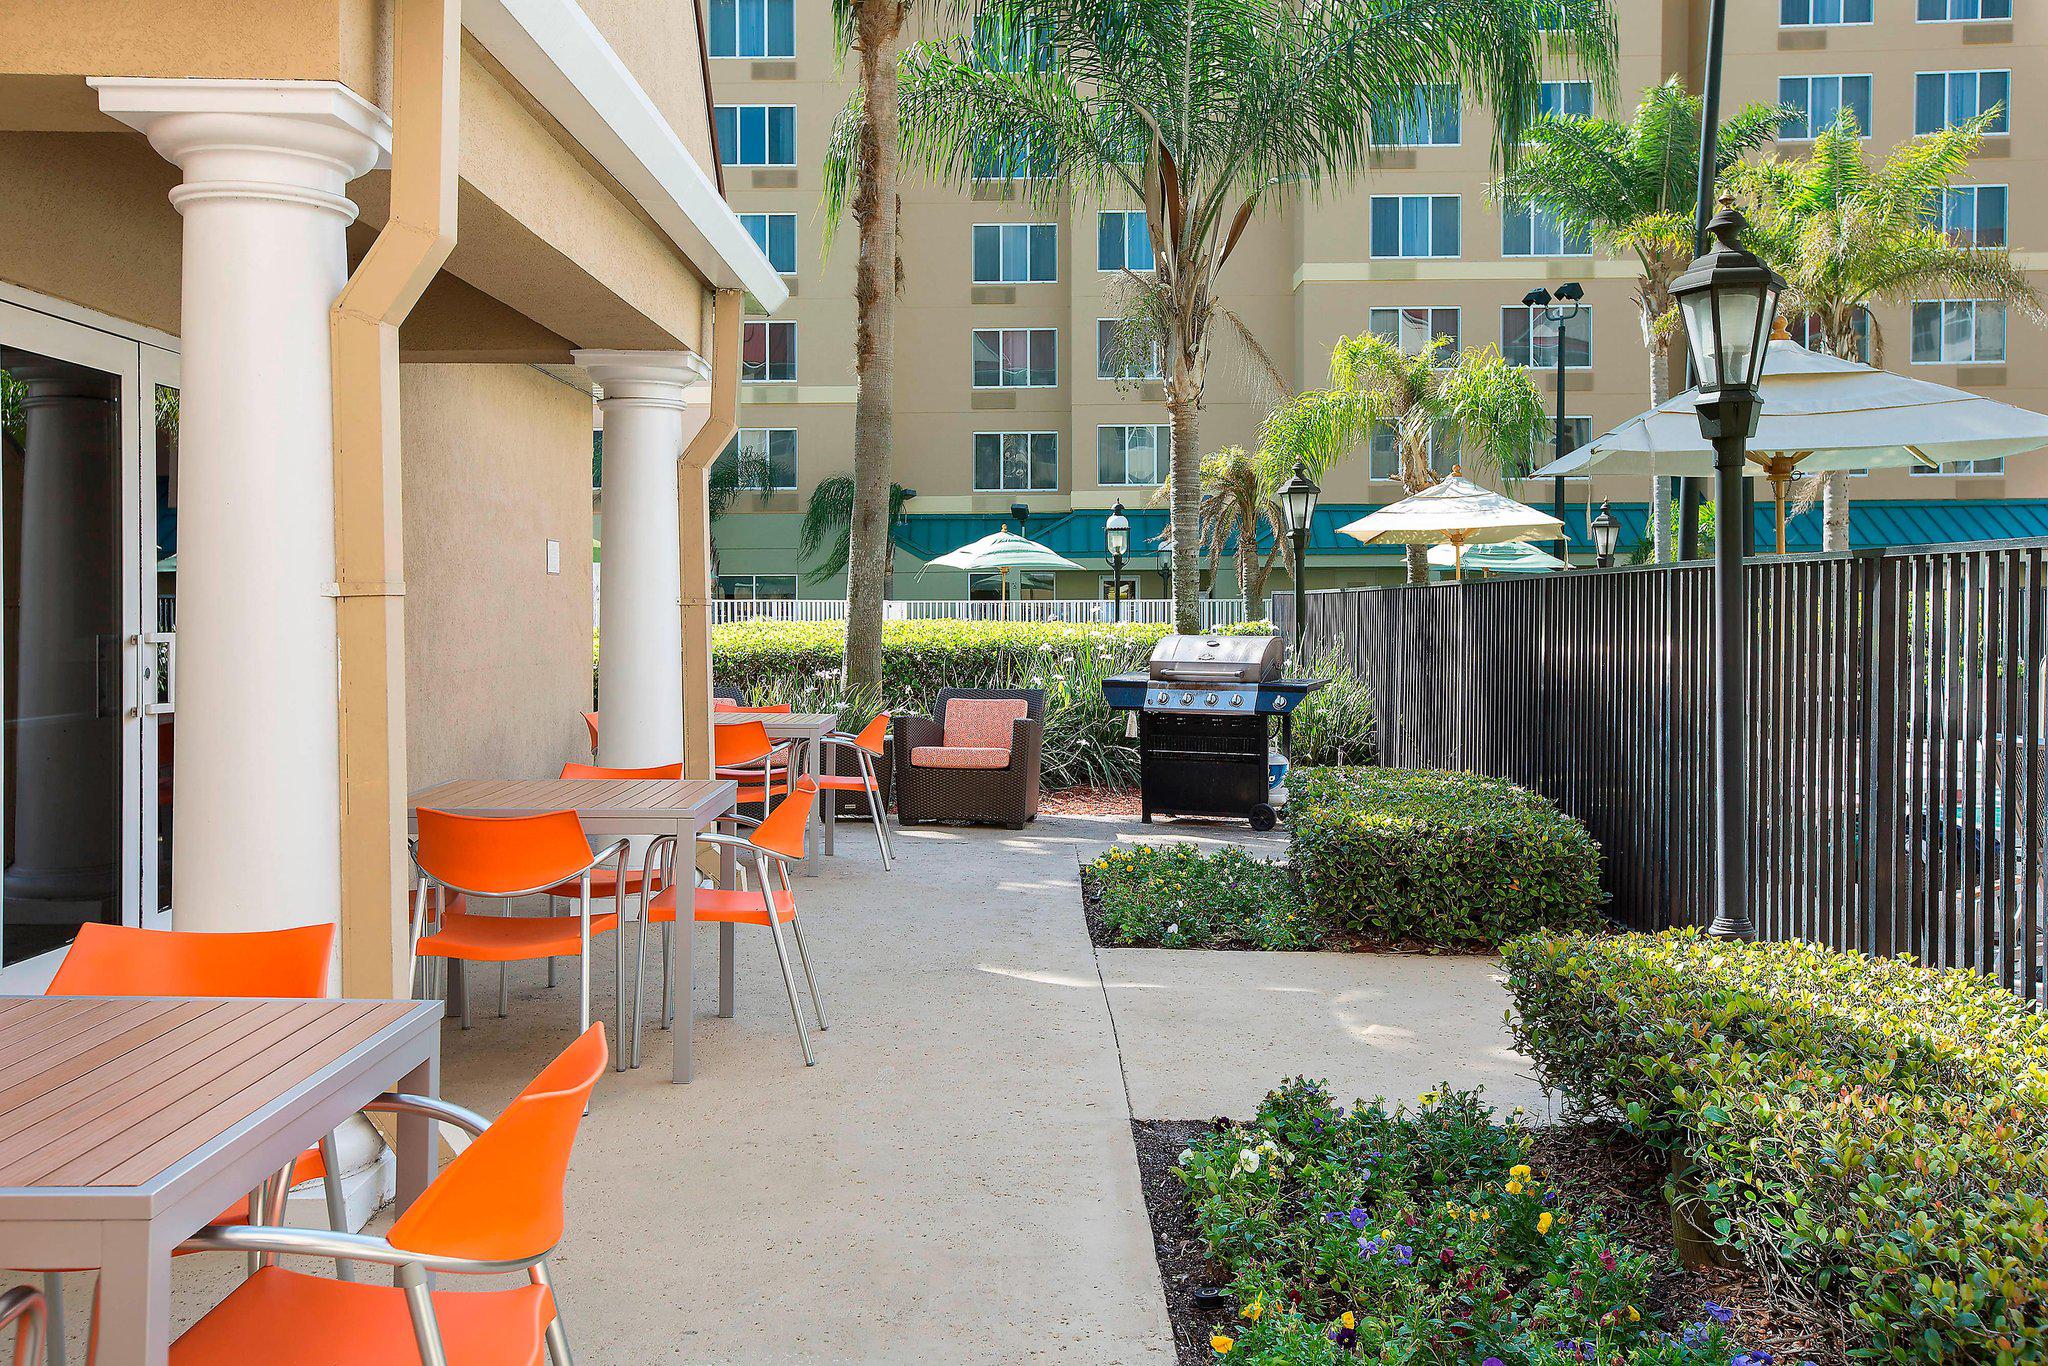 Residence Inn by Marriott Orlando Convention Center Photo